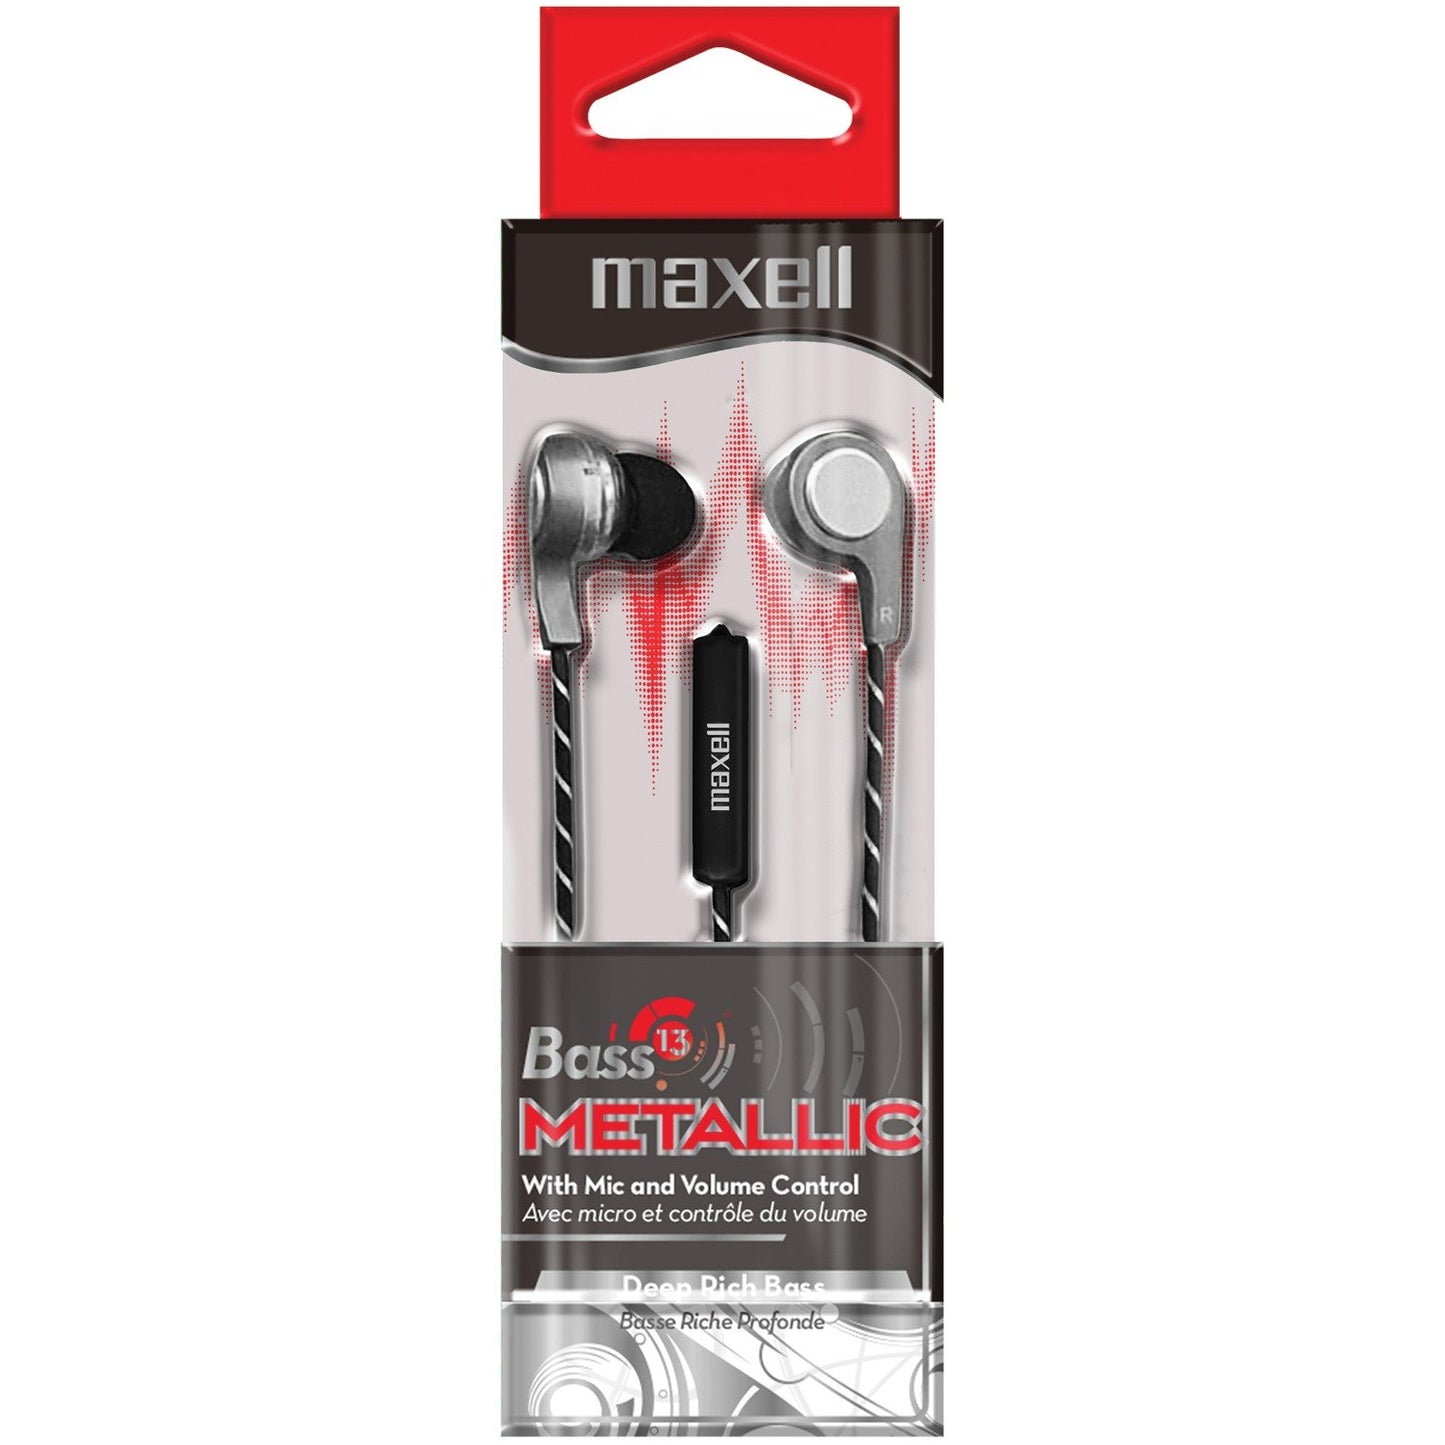 Maxell 199600 Bass 13 Metallic In-Ear Earbuds w/Microphone (Silver)